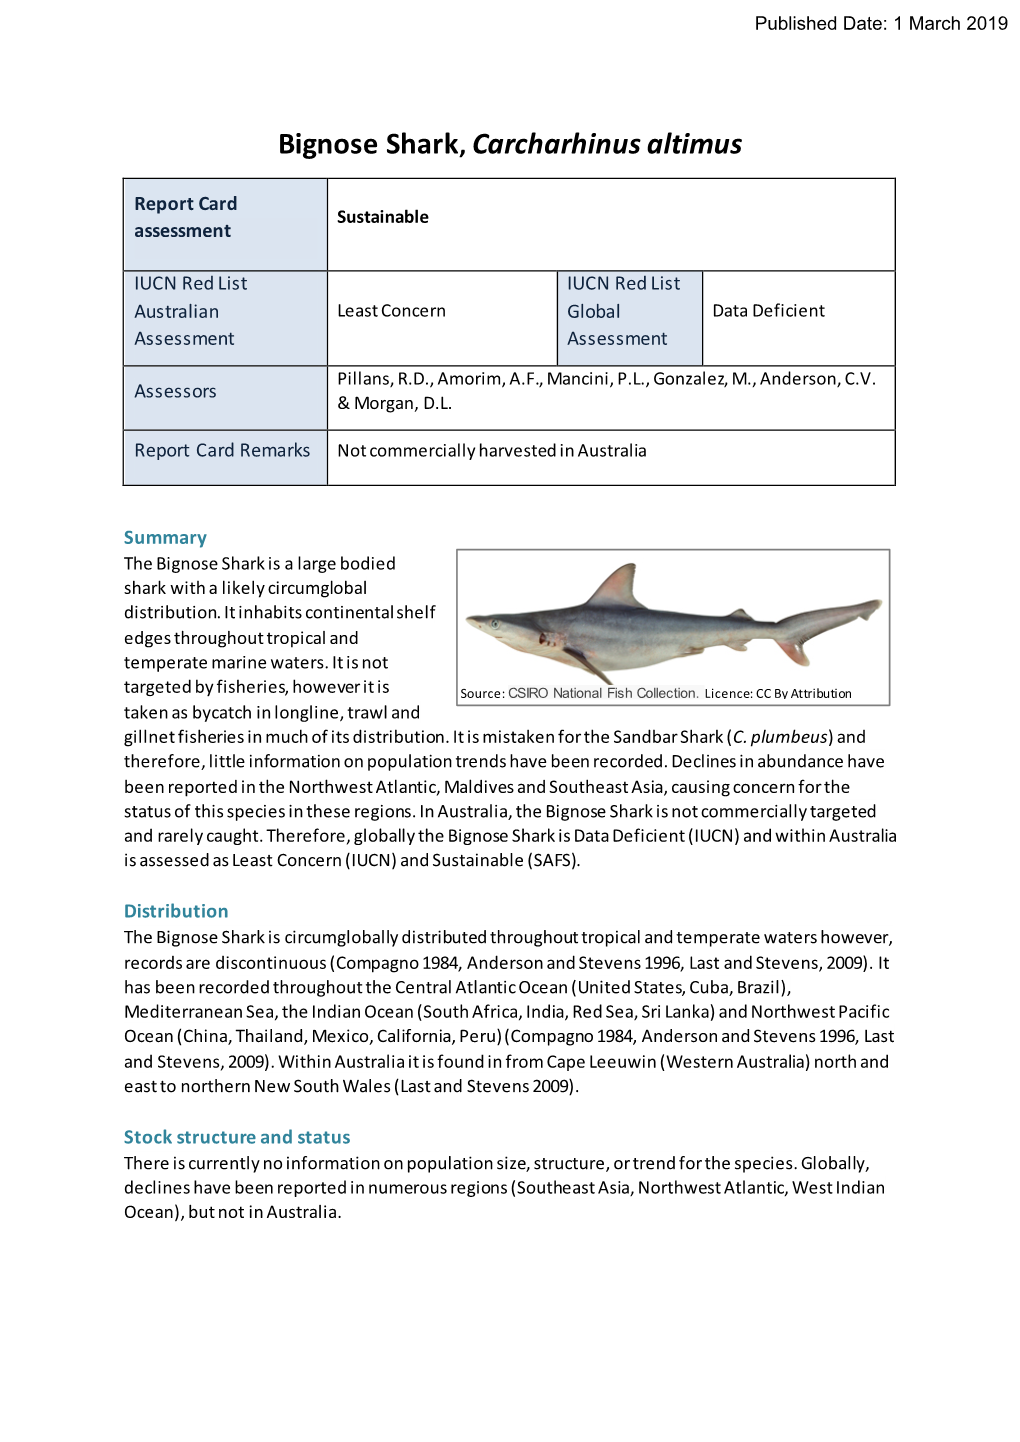 Bignose Shark, Carcharhinus Altimus